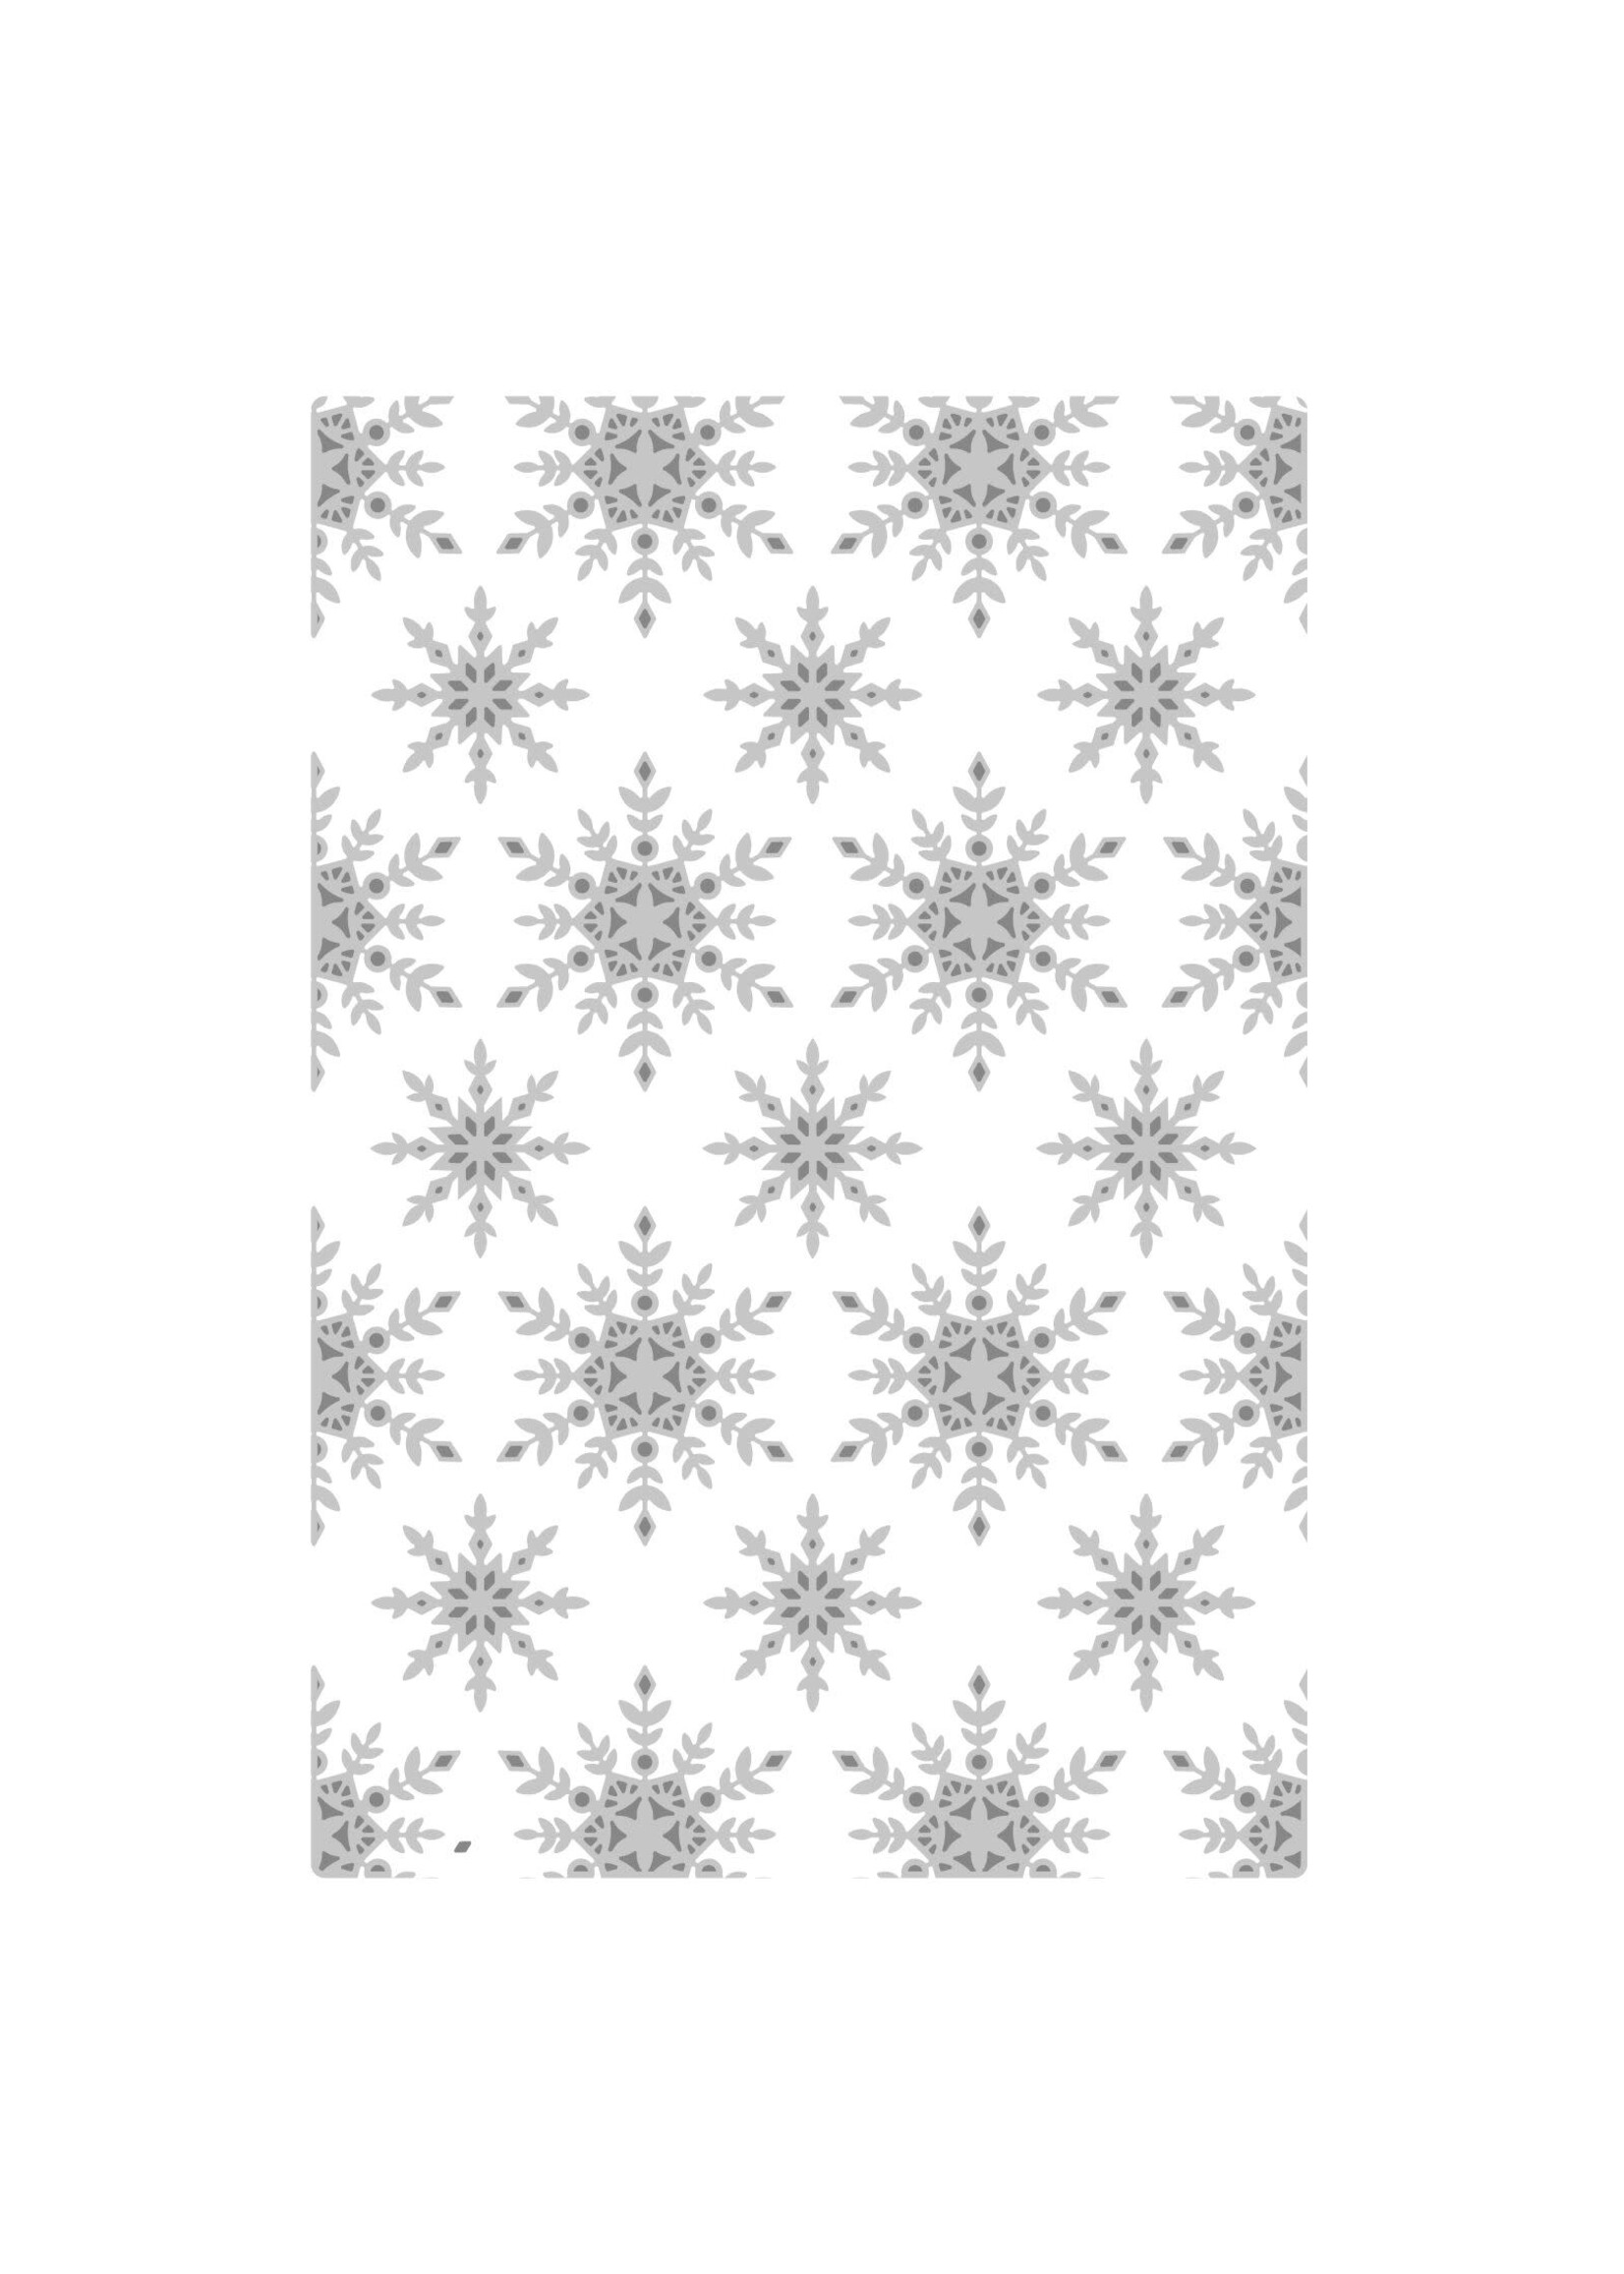 Sizzix Multi-Level Textured Impressions Embossing Folder Snowflake Sparkle by Lisa Jones